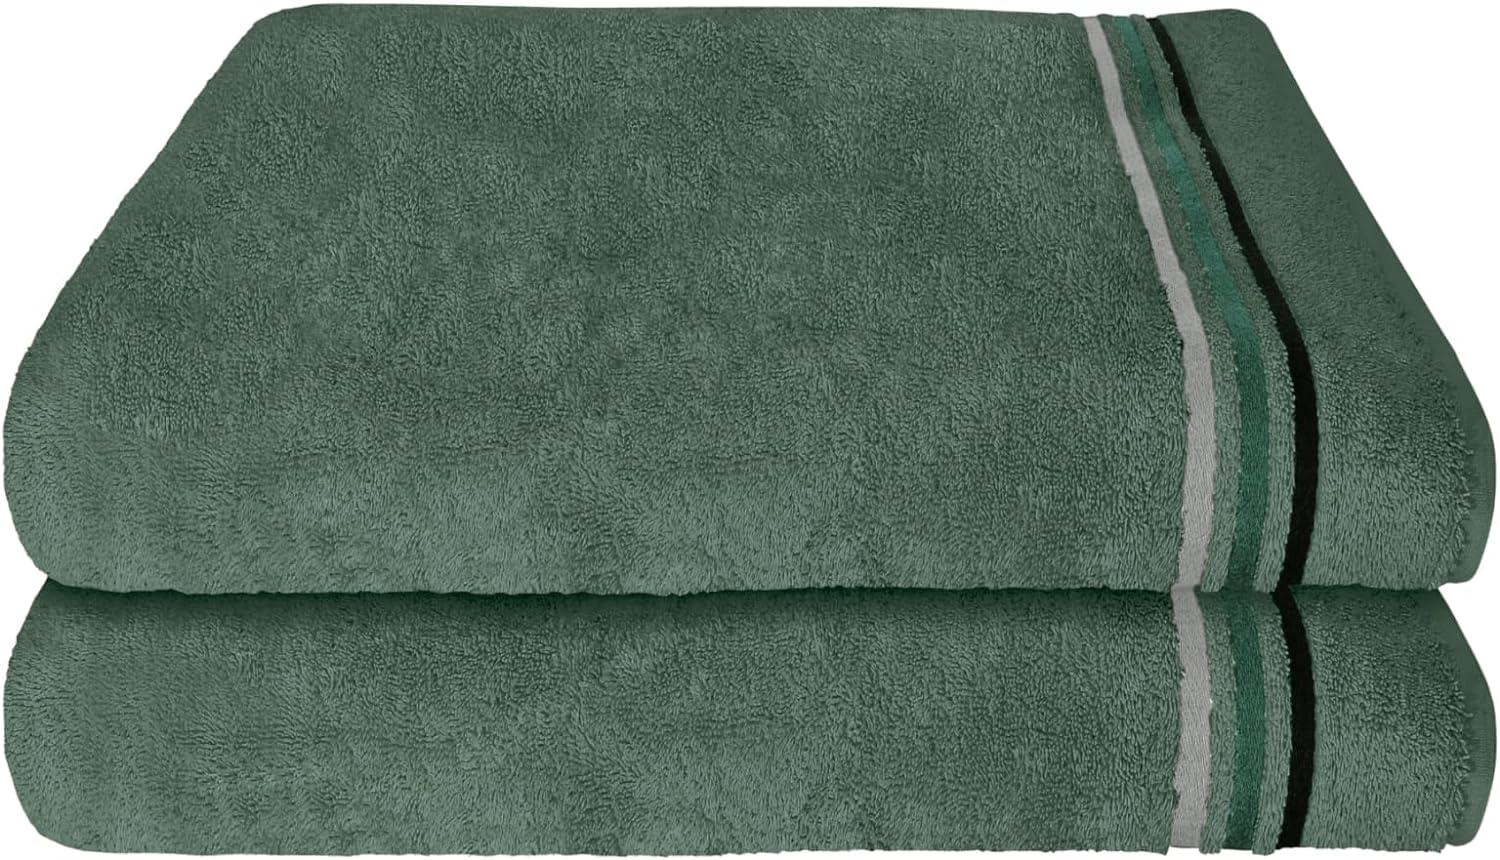 Schiesser Frottier Duschtücher Skyline Color im 2er Set aus kuschelweicher Baumwolle, Made IN Green, Farbe:Dunkelgrün, Größe:70 x 140 cm Bild 1